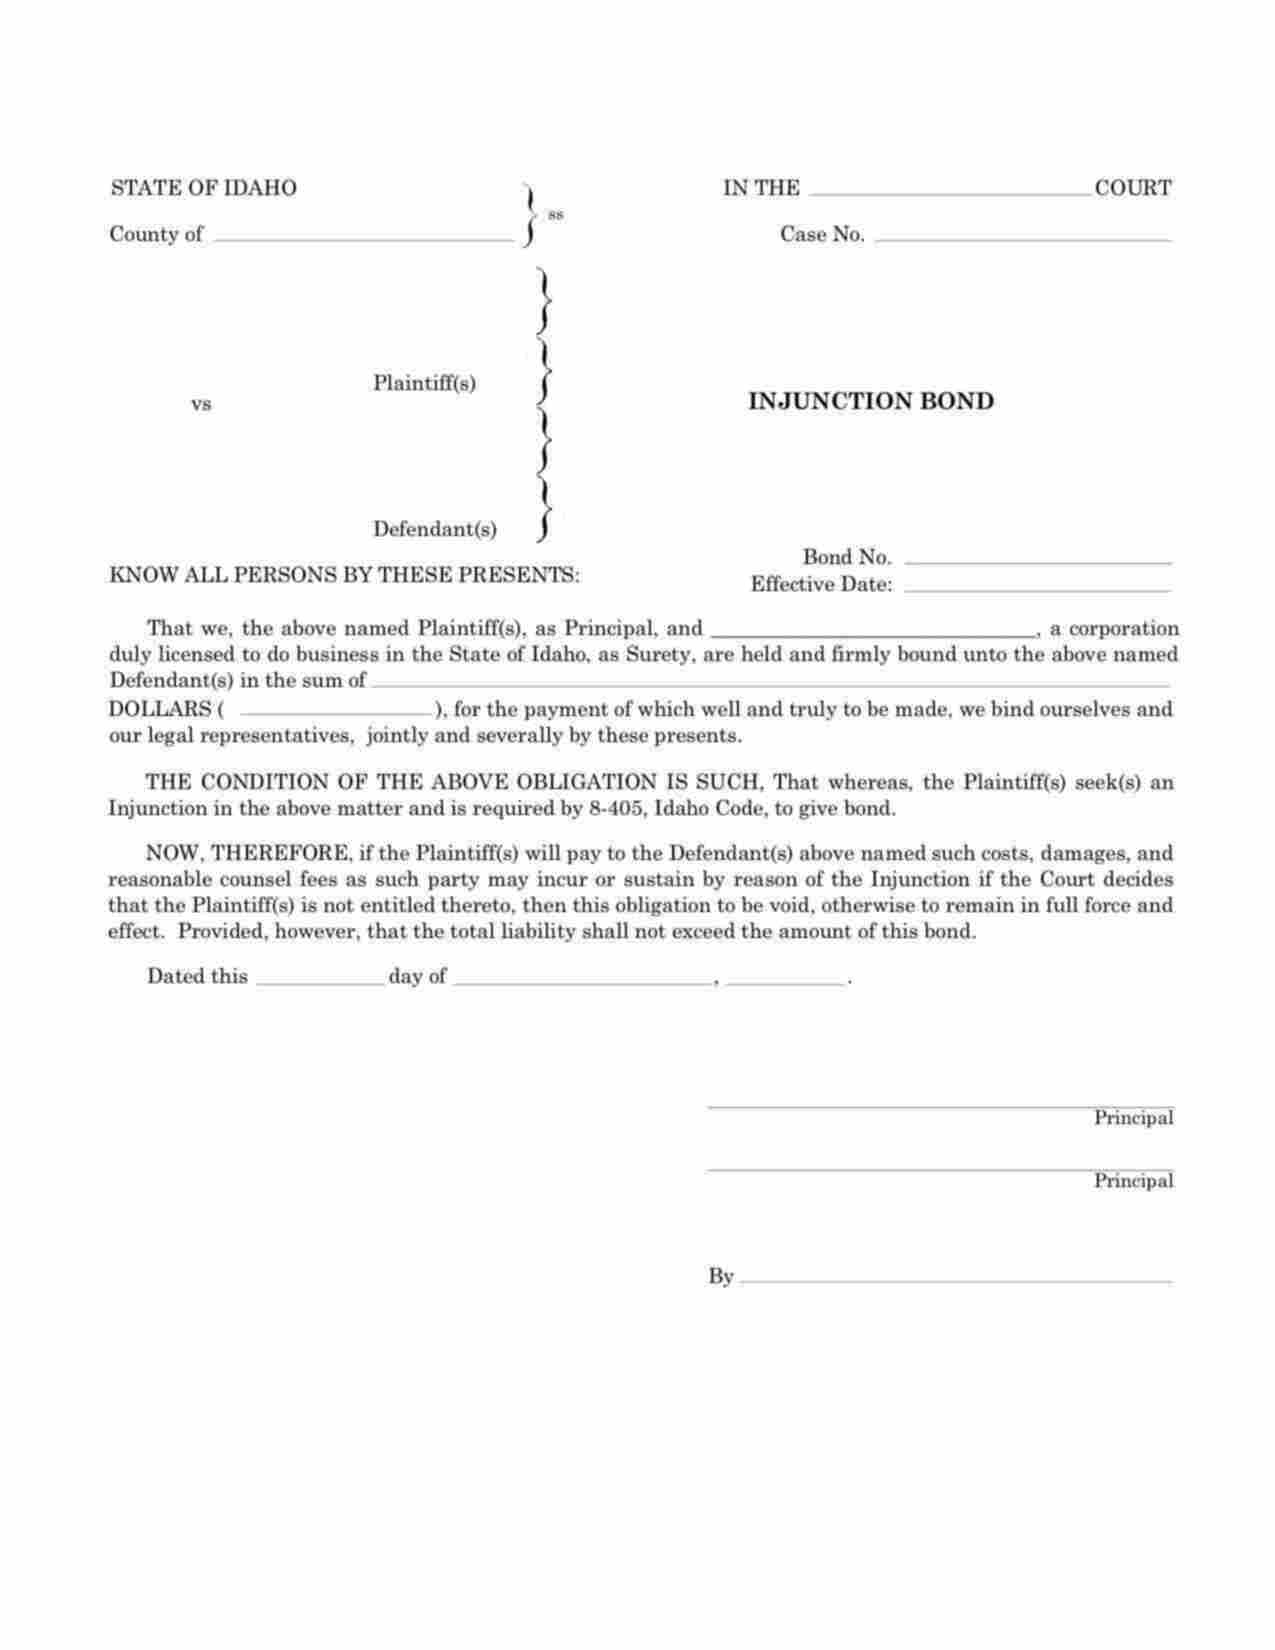 Idaho Injunction Bond Form